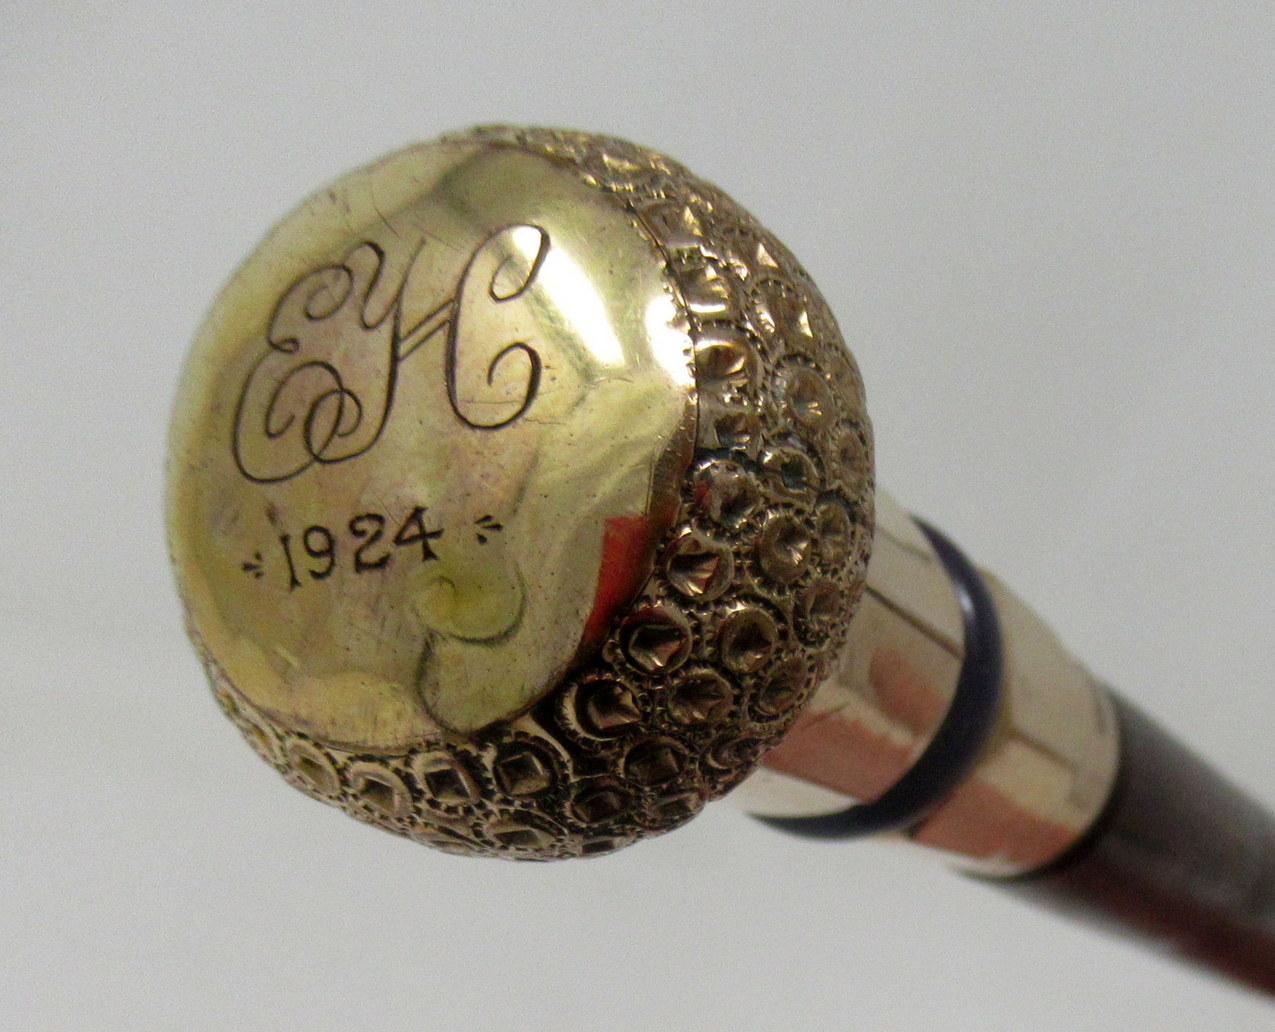 20th Century Antique Vintage Partridge Wood Walking Stick Cane 18-Carat Gold-Plated Grip 1924